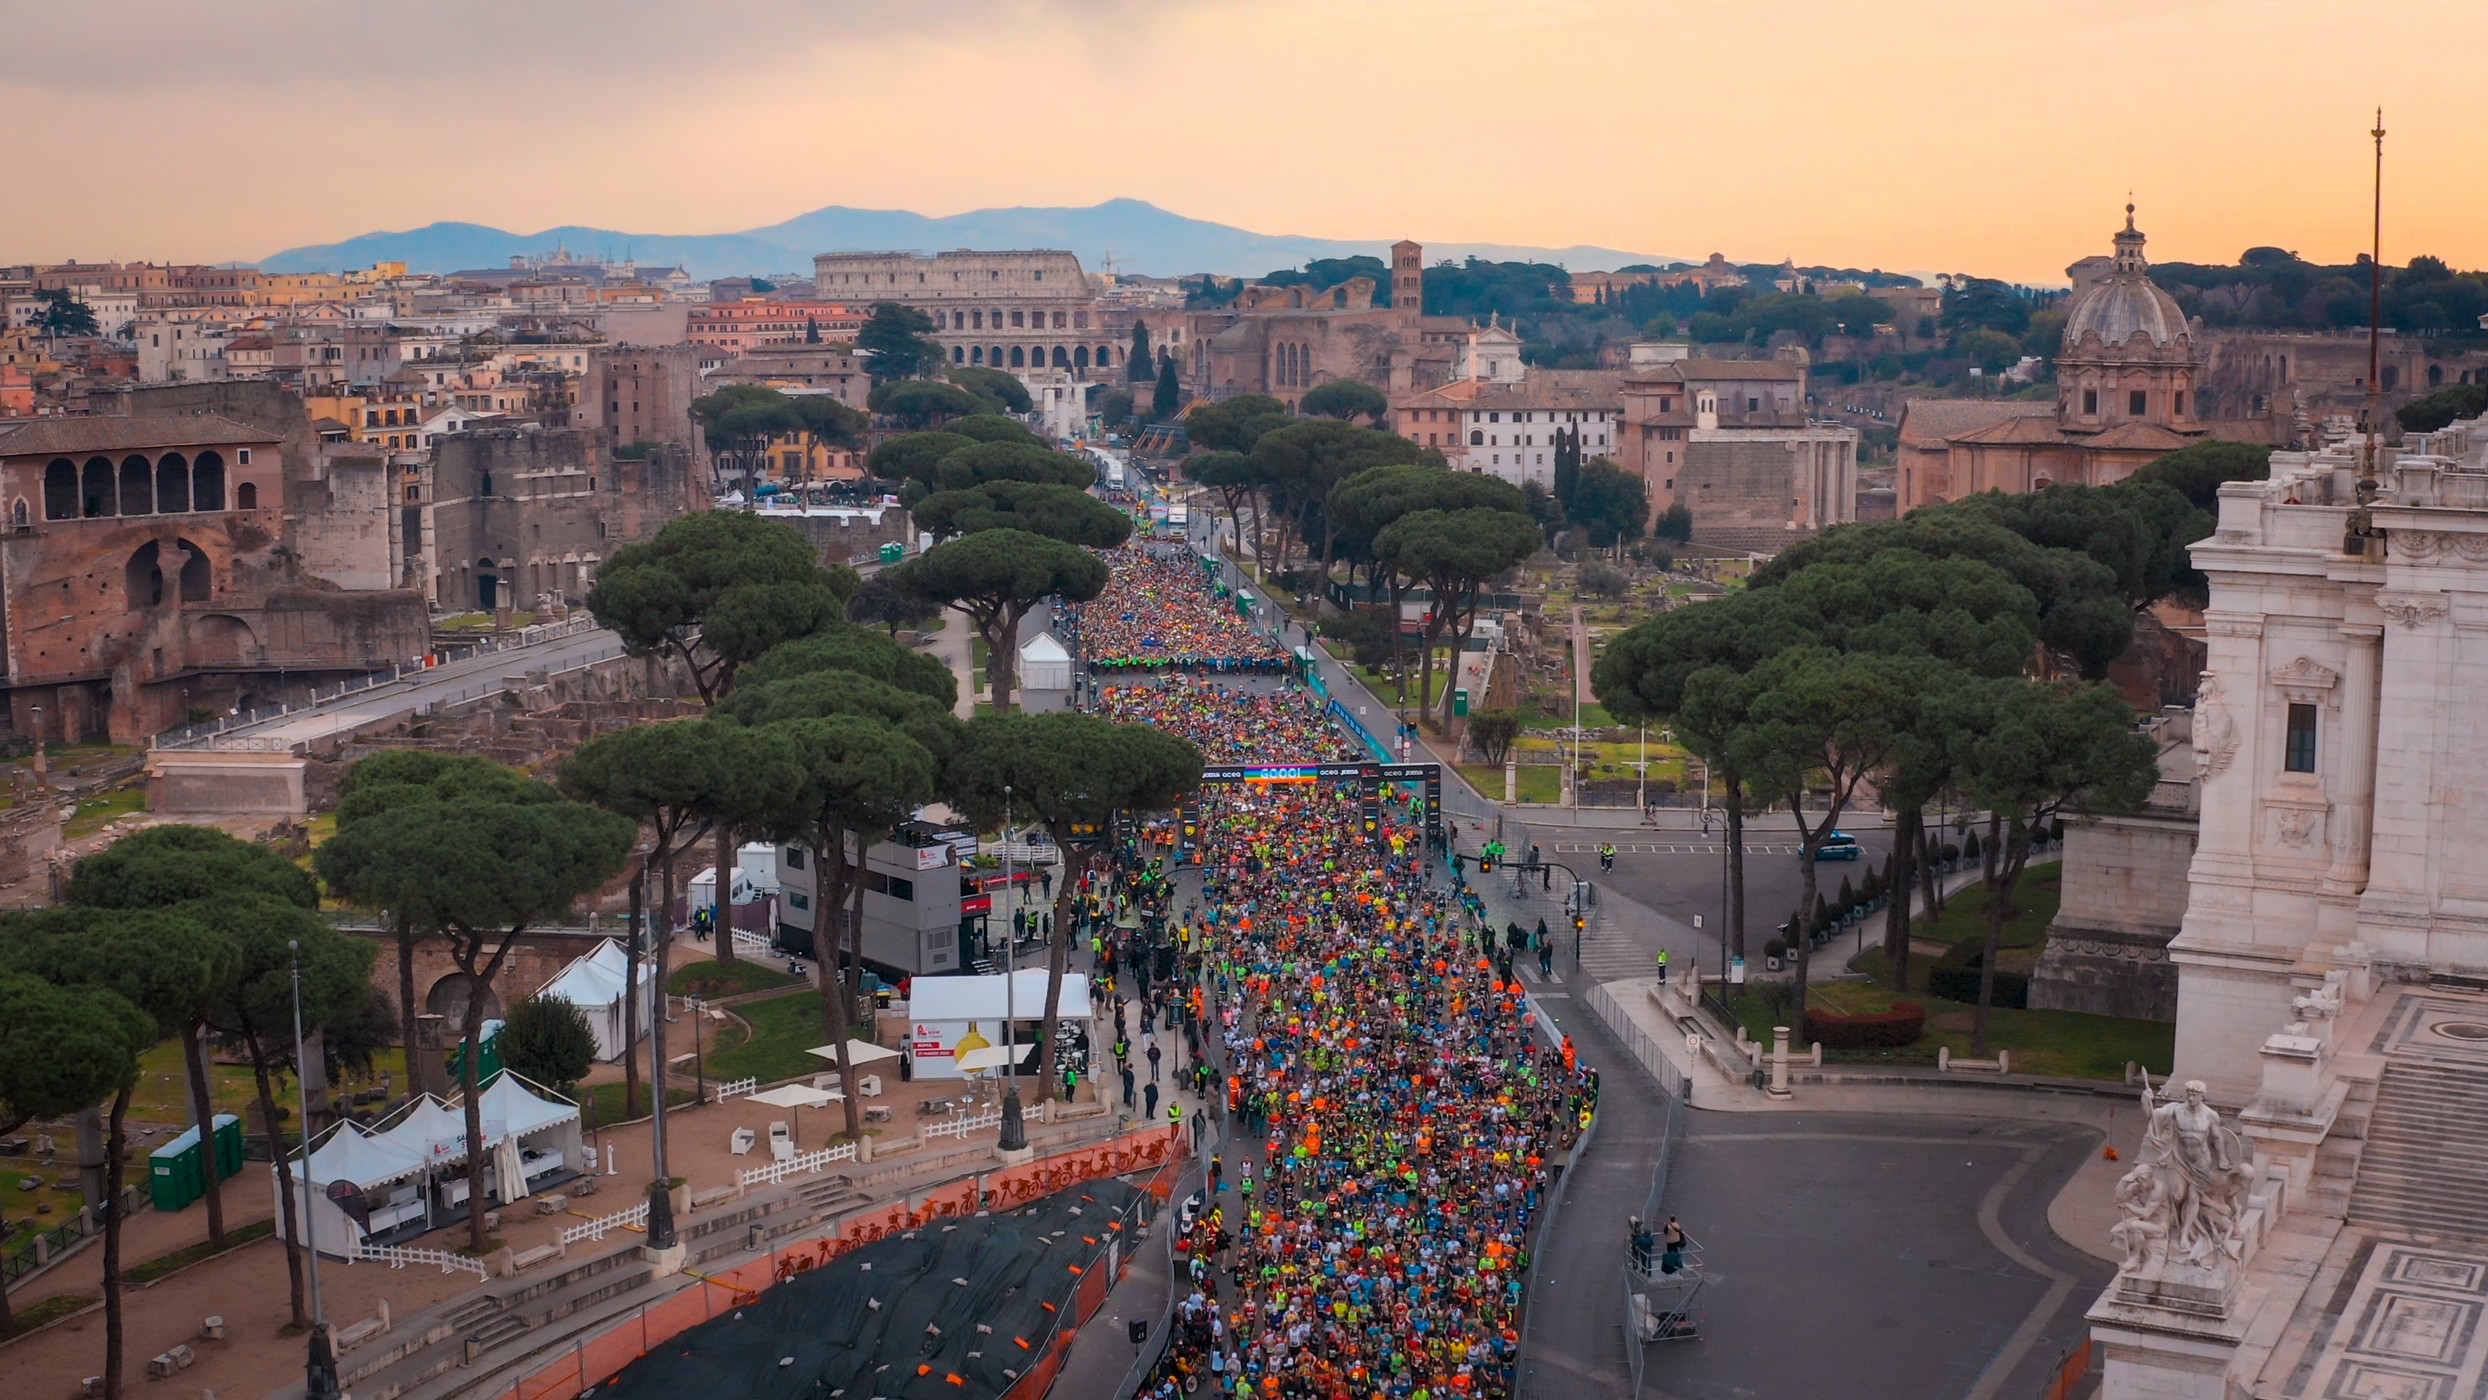 16,000 finishers in the Acea Run Rome The Marathon events. 8389 in the marathon